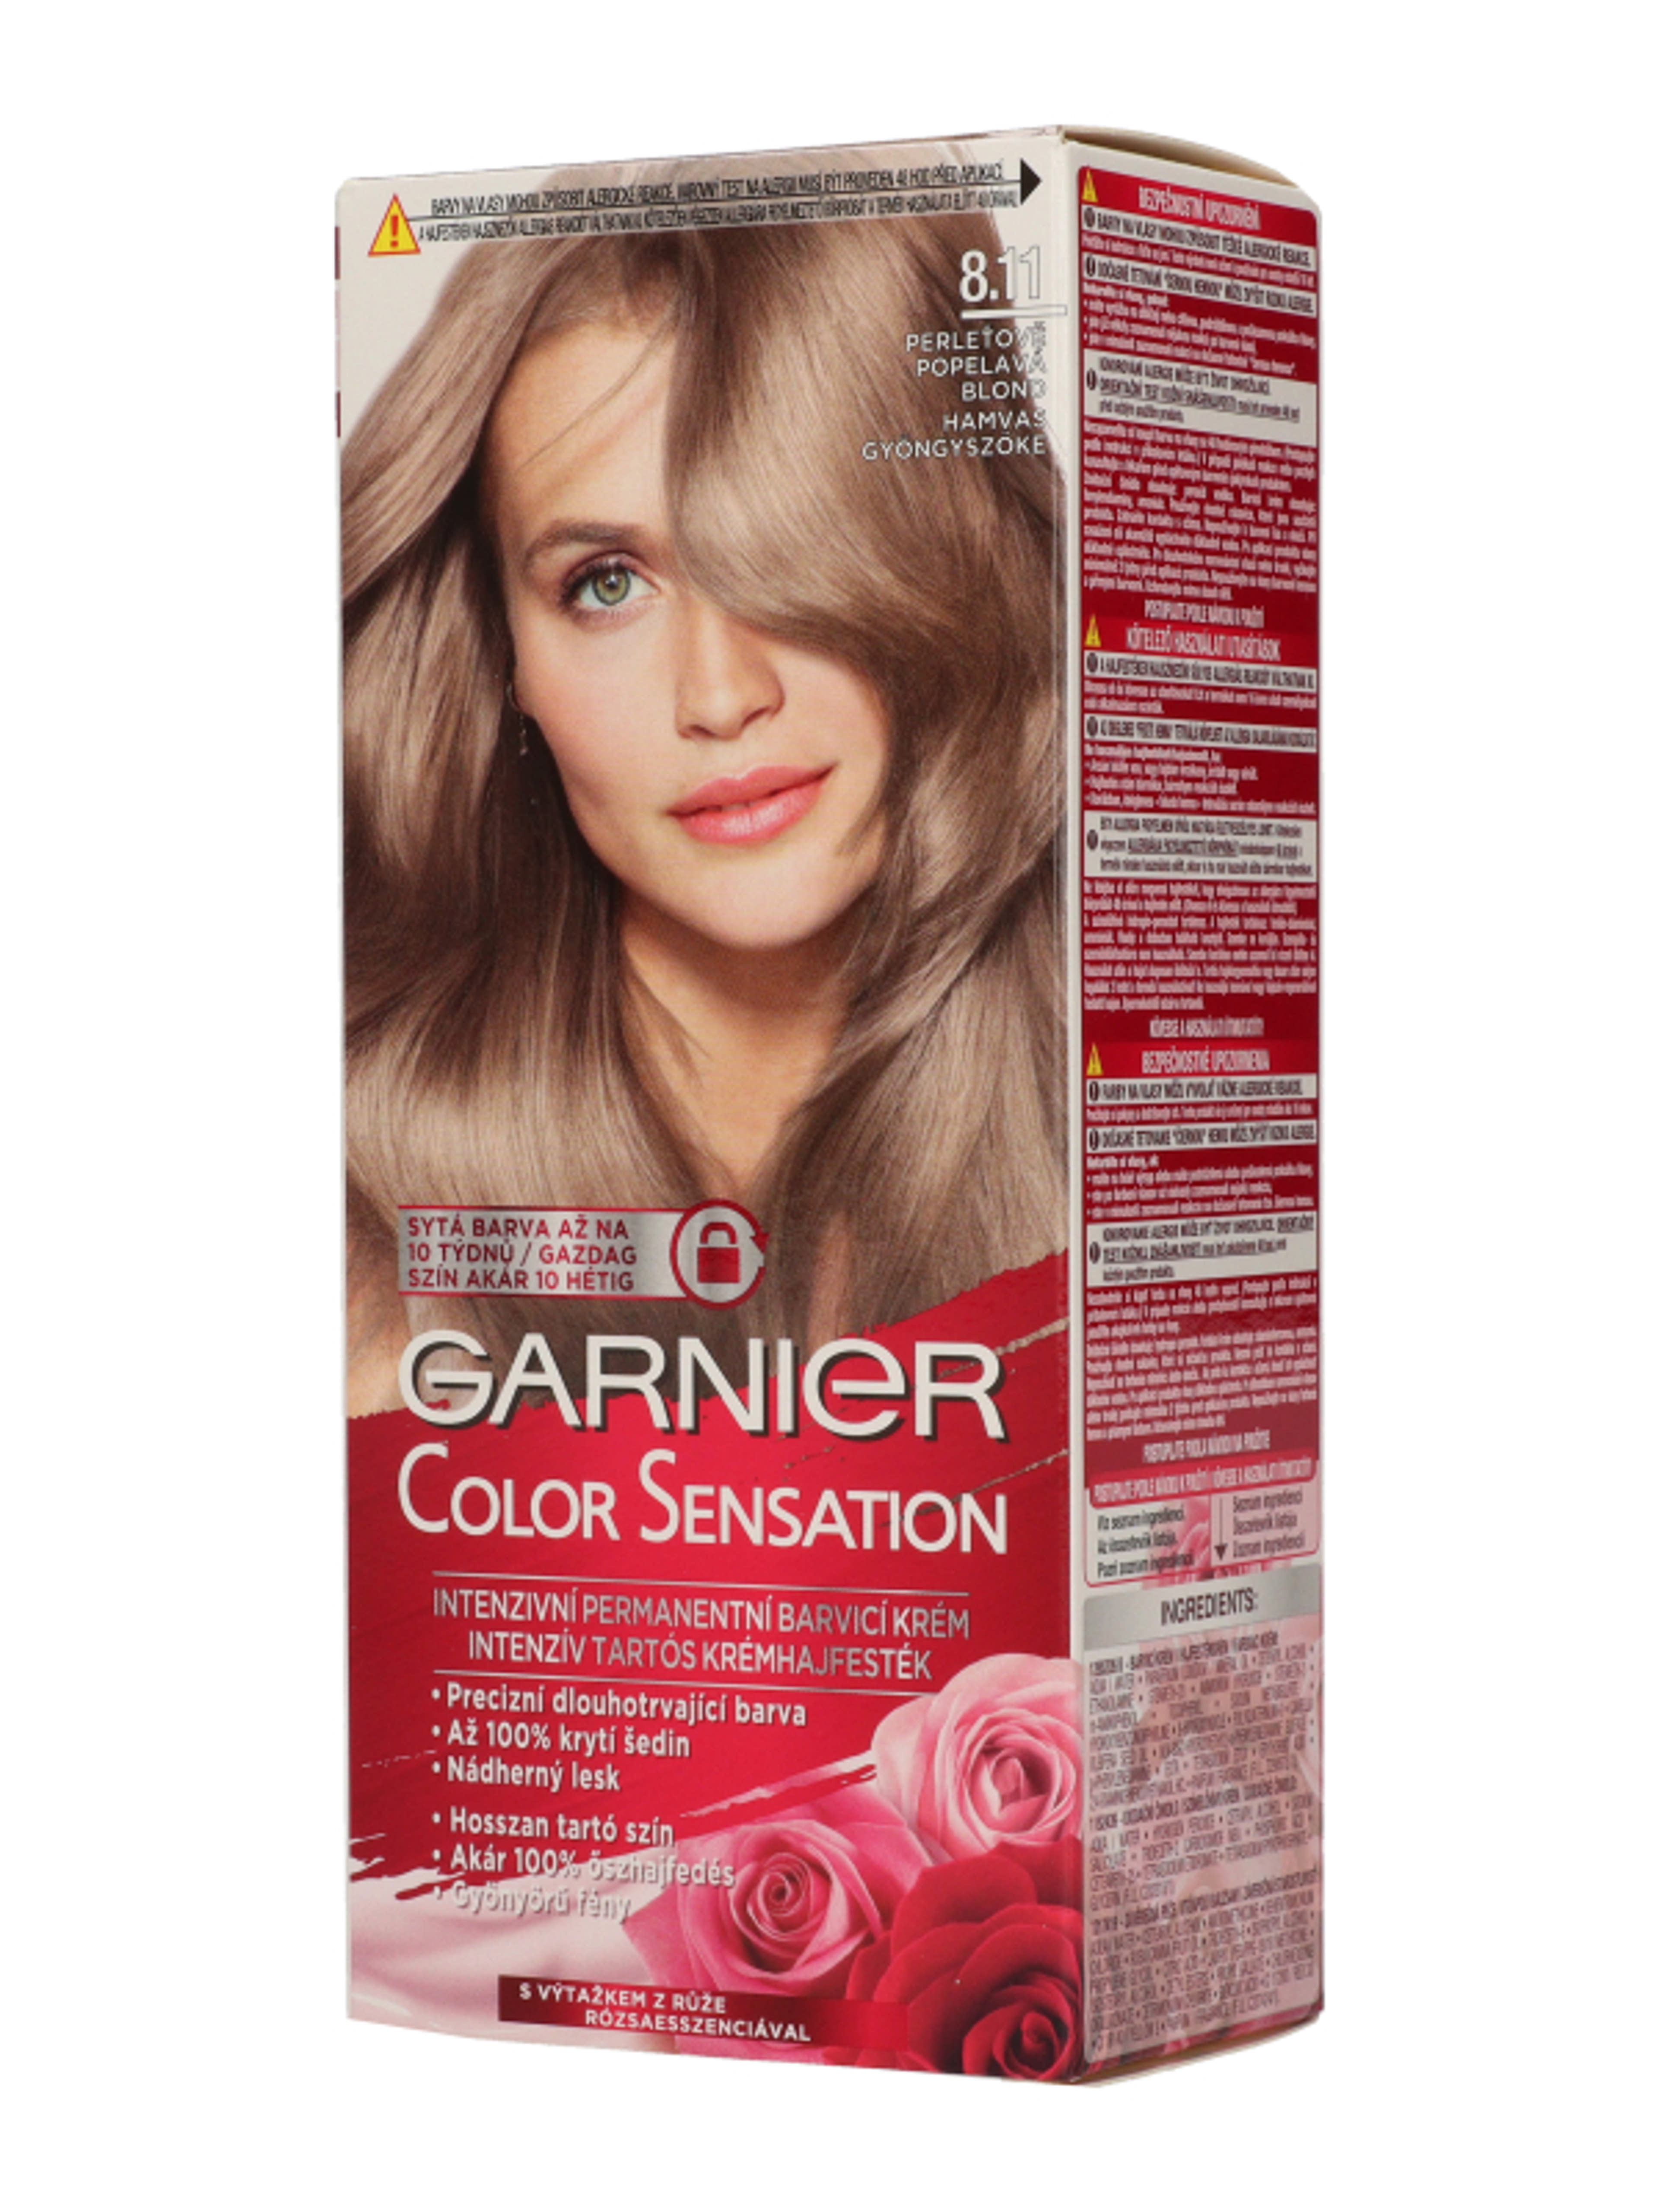 Garnier Color Sensation tartós hajfesték 8.11 - 1 db-4